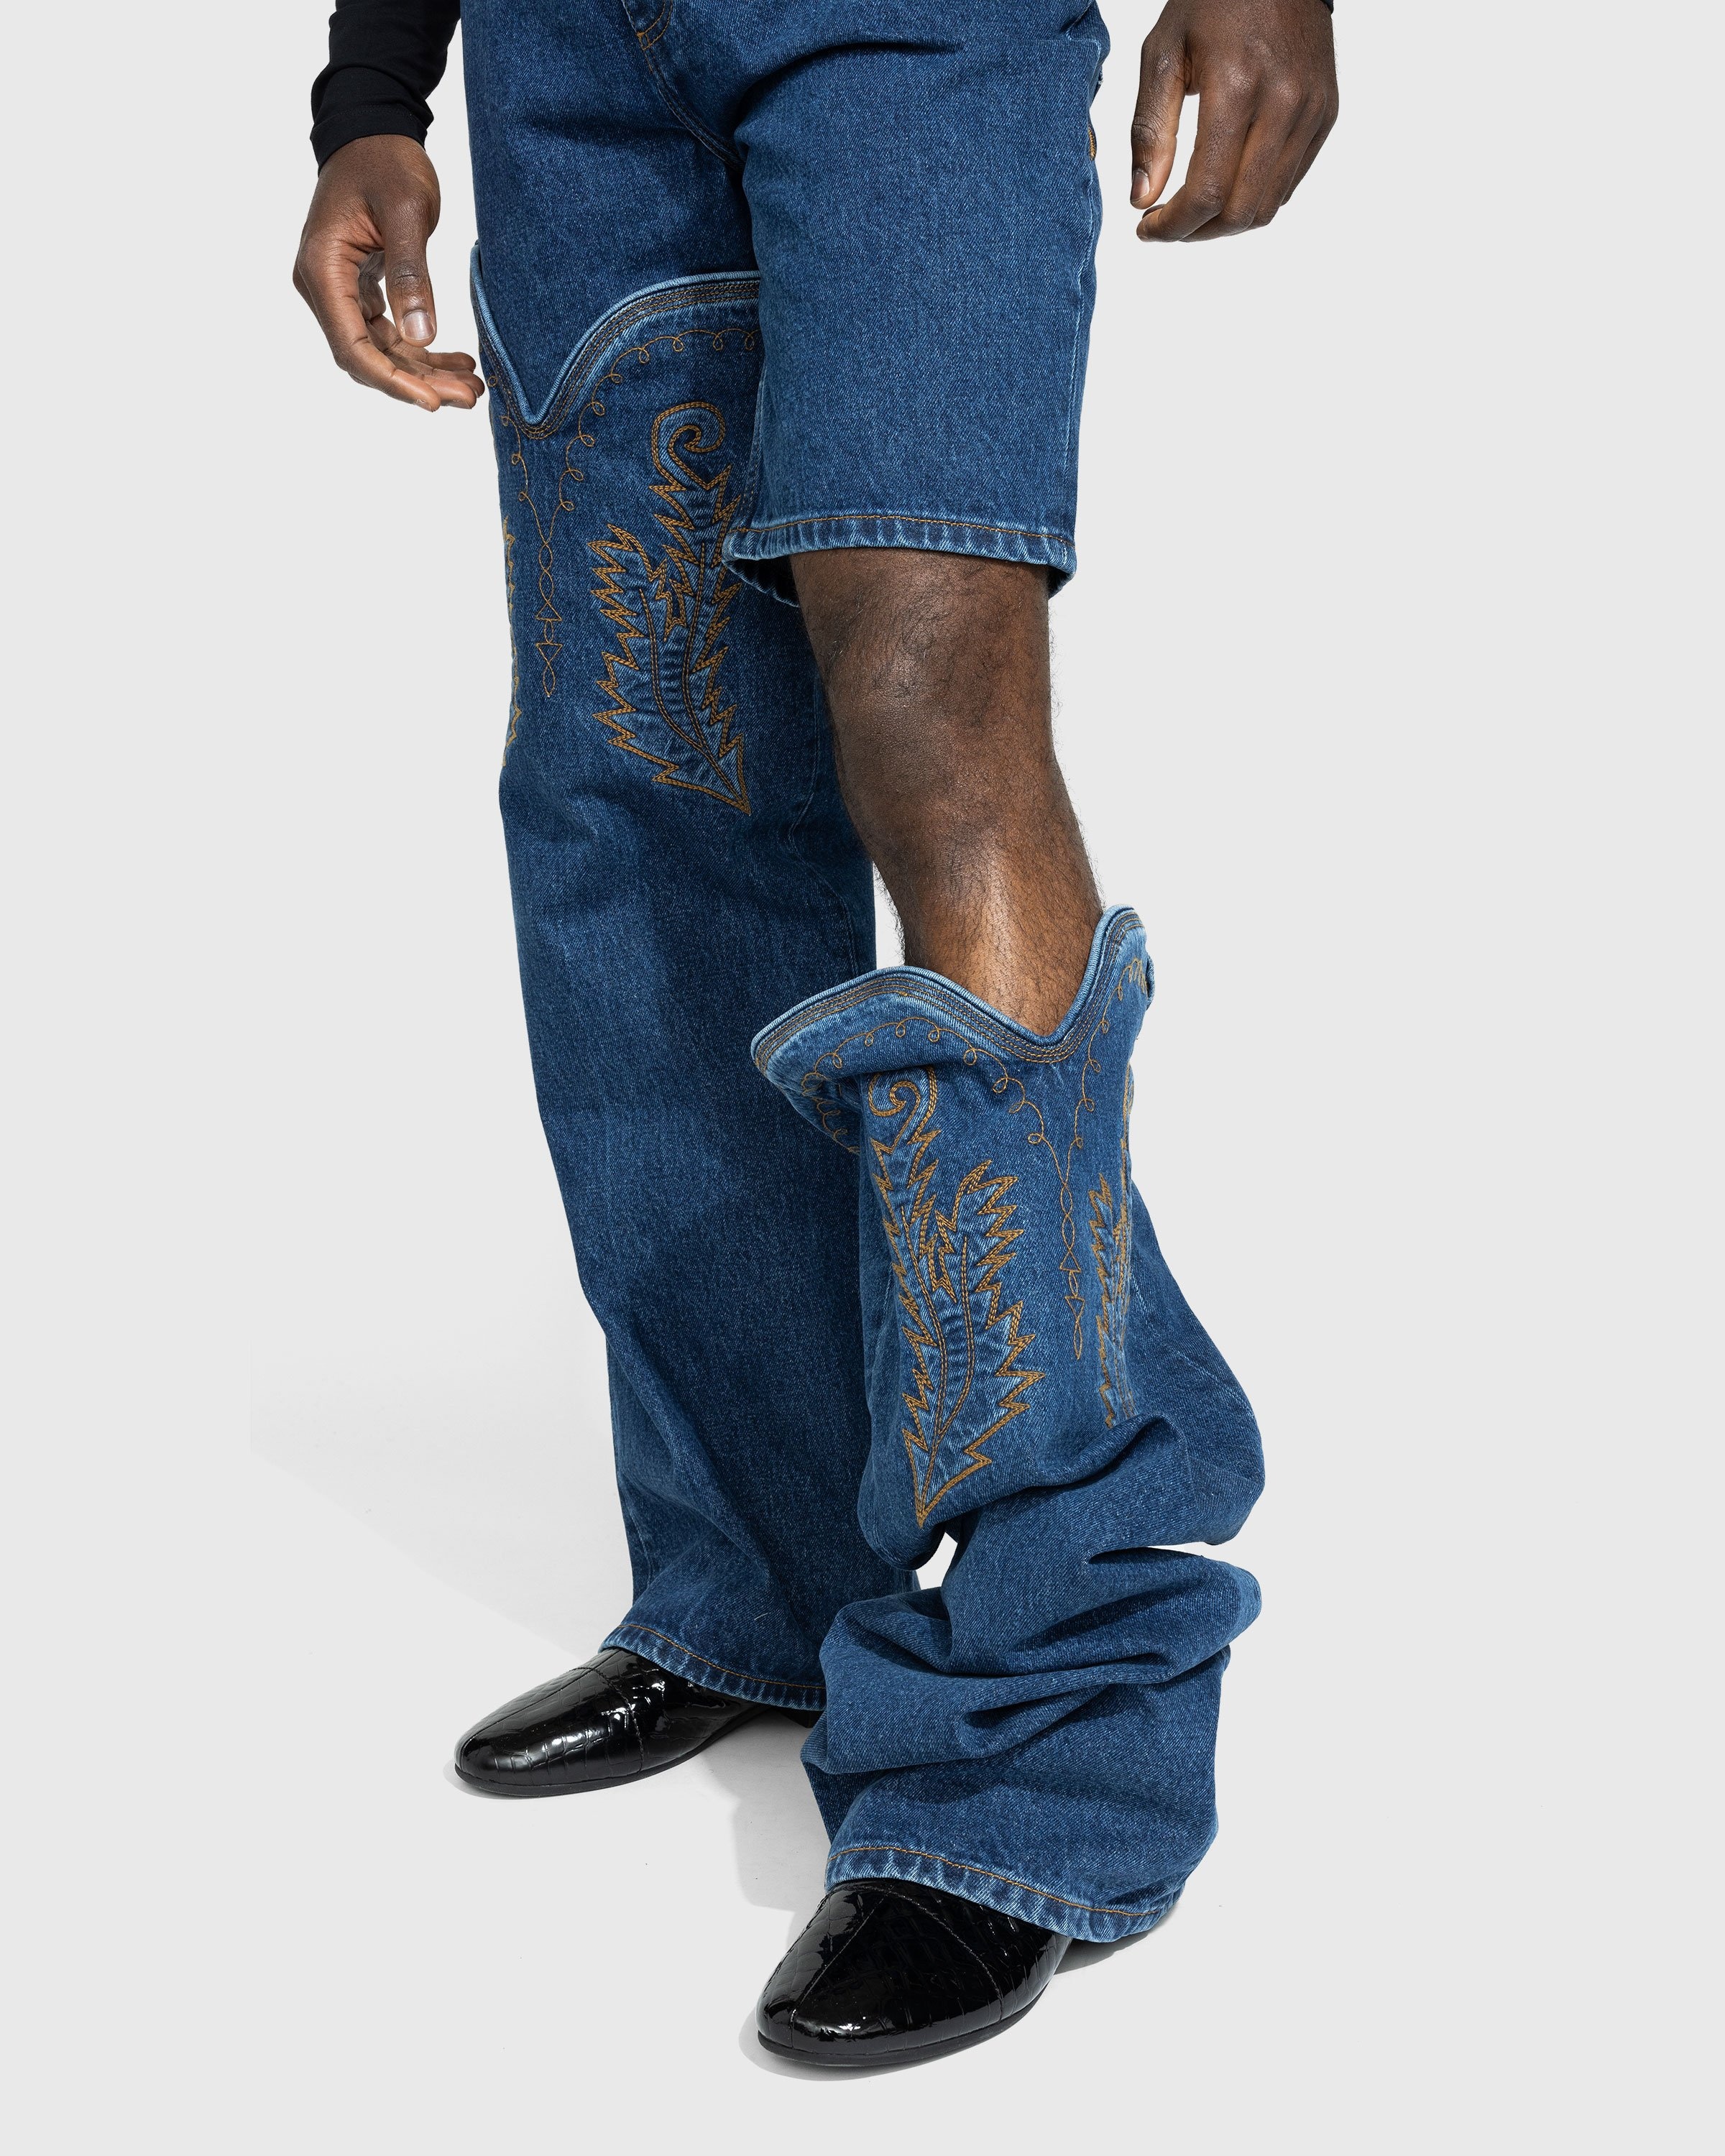 Y/PROJECT Cowboy-Cuff Straight Jeans メンズ - デニム/ジーンズ